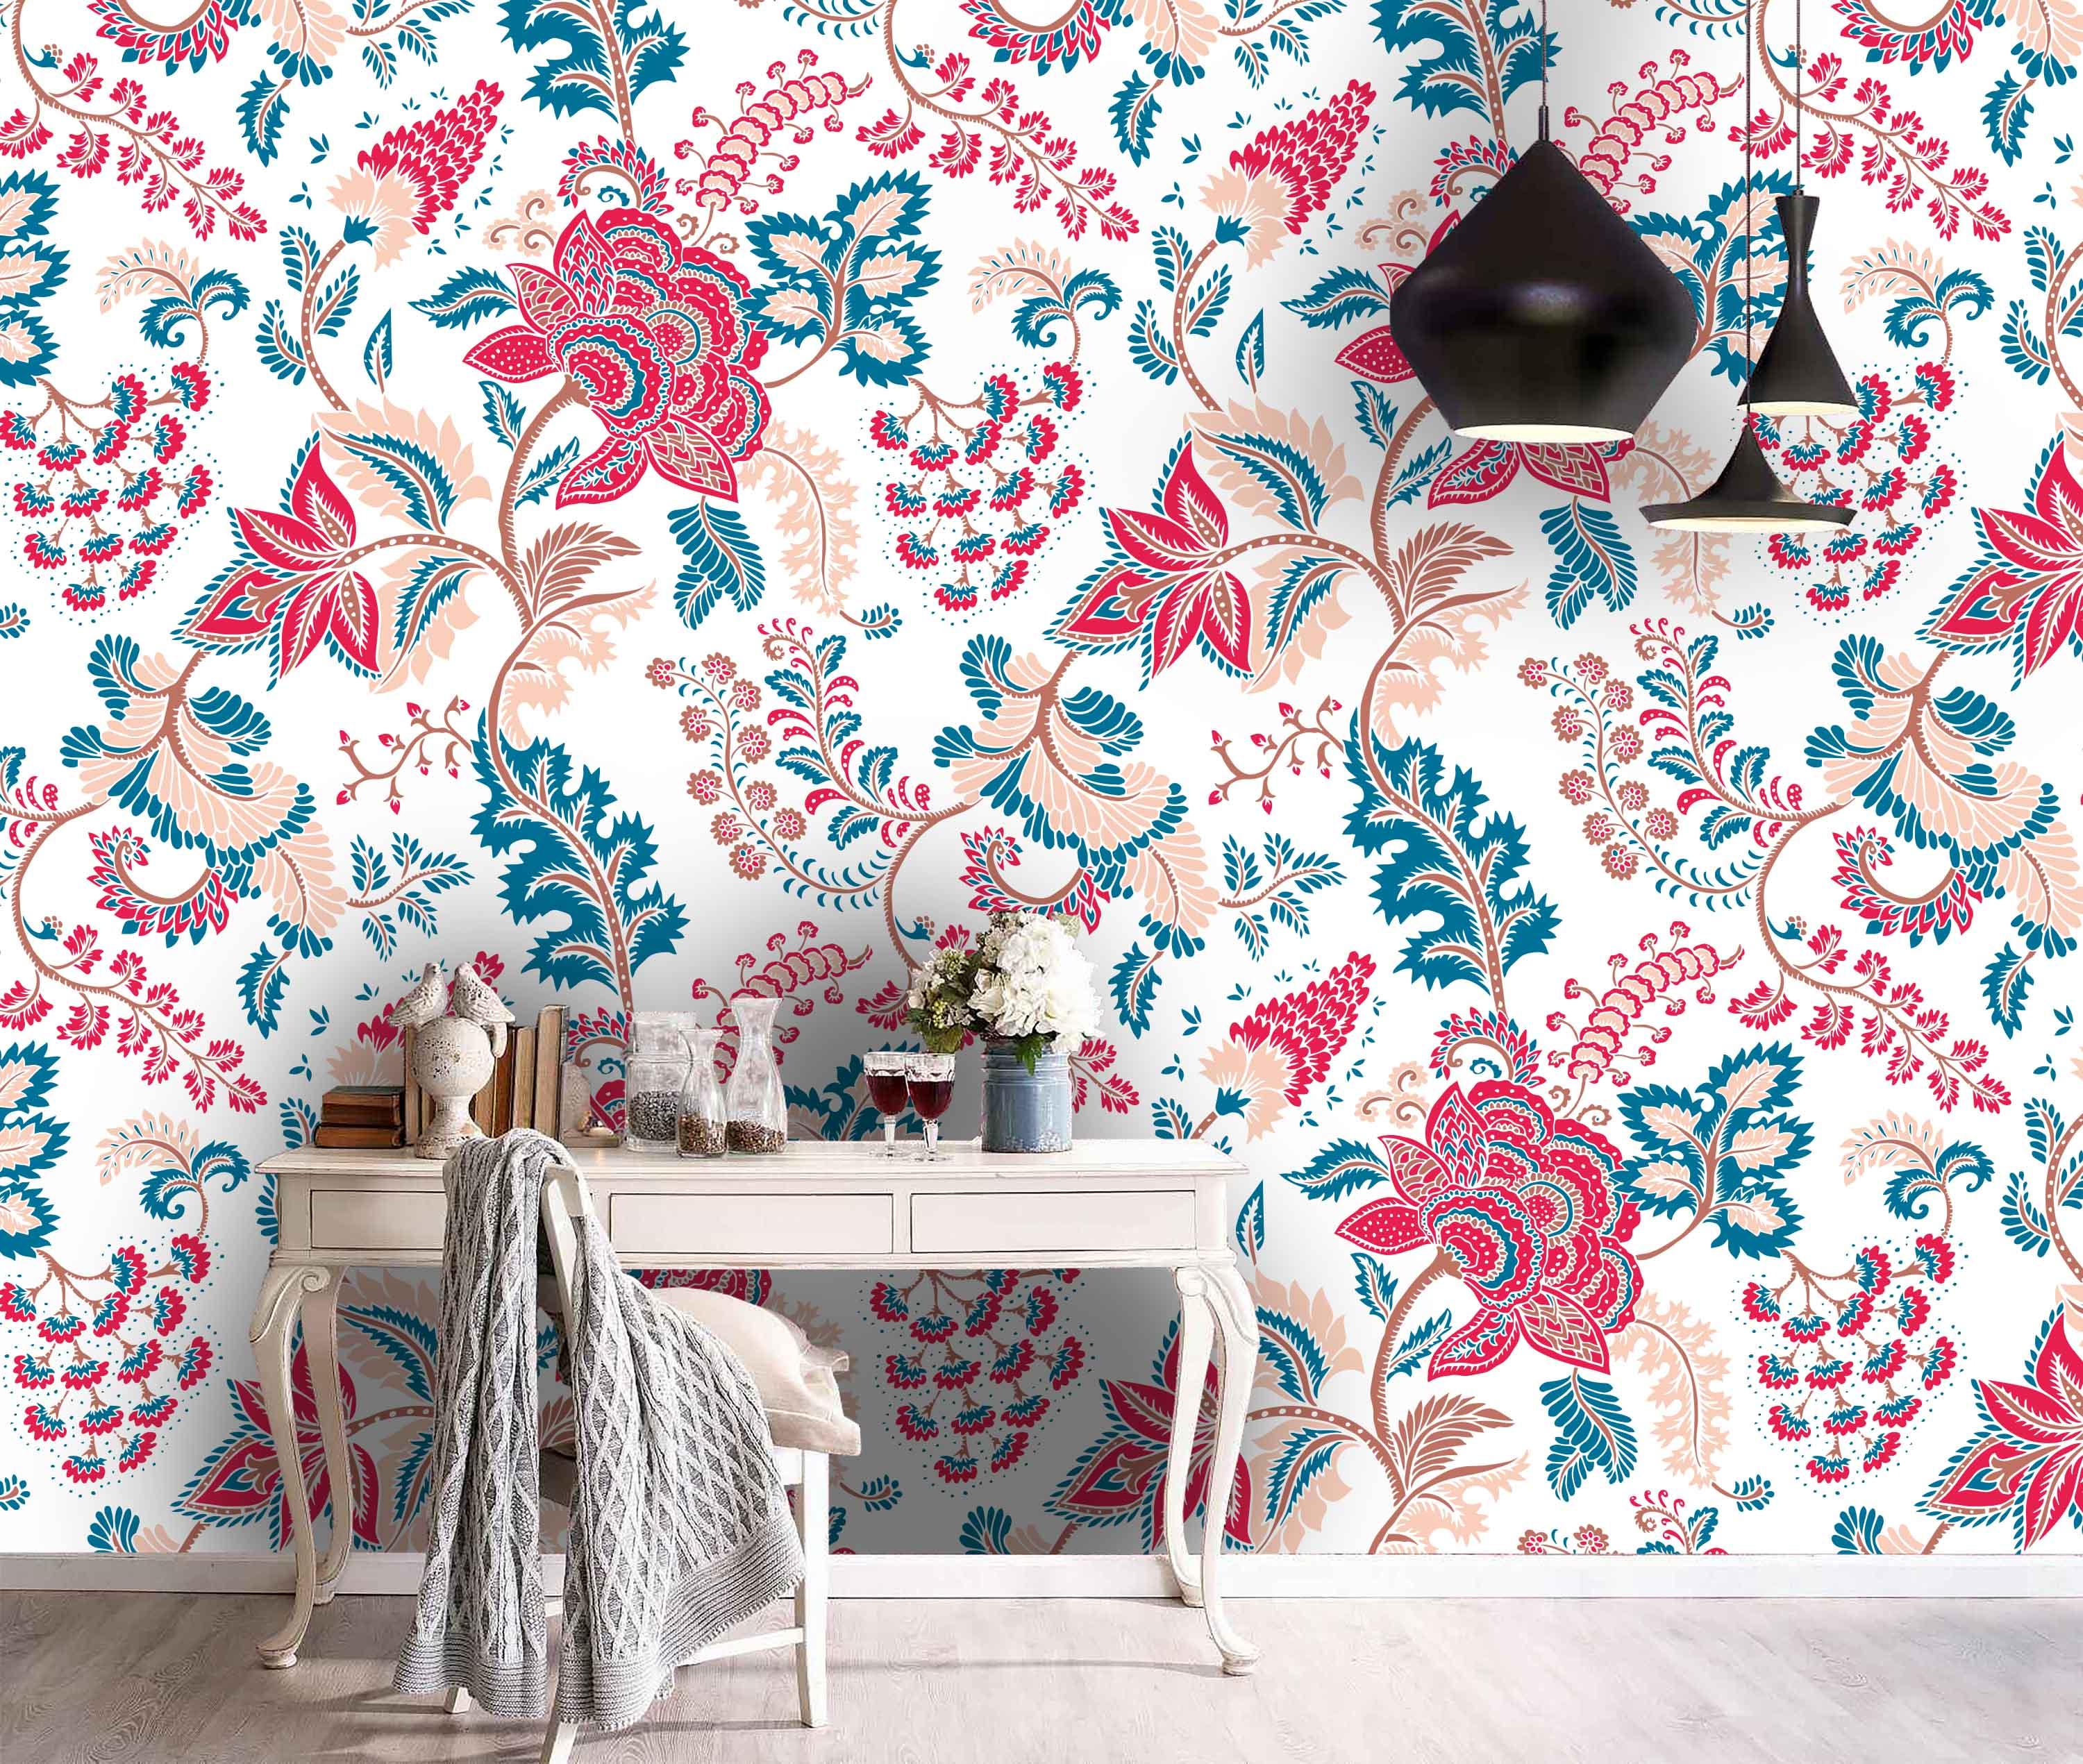 3D Colorful Flower Pattern Wall Mural Wallpaper 79- Jess Art Decoration